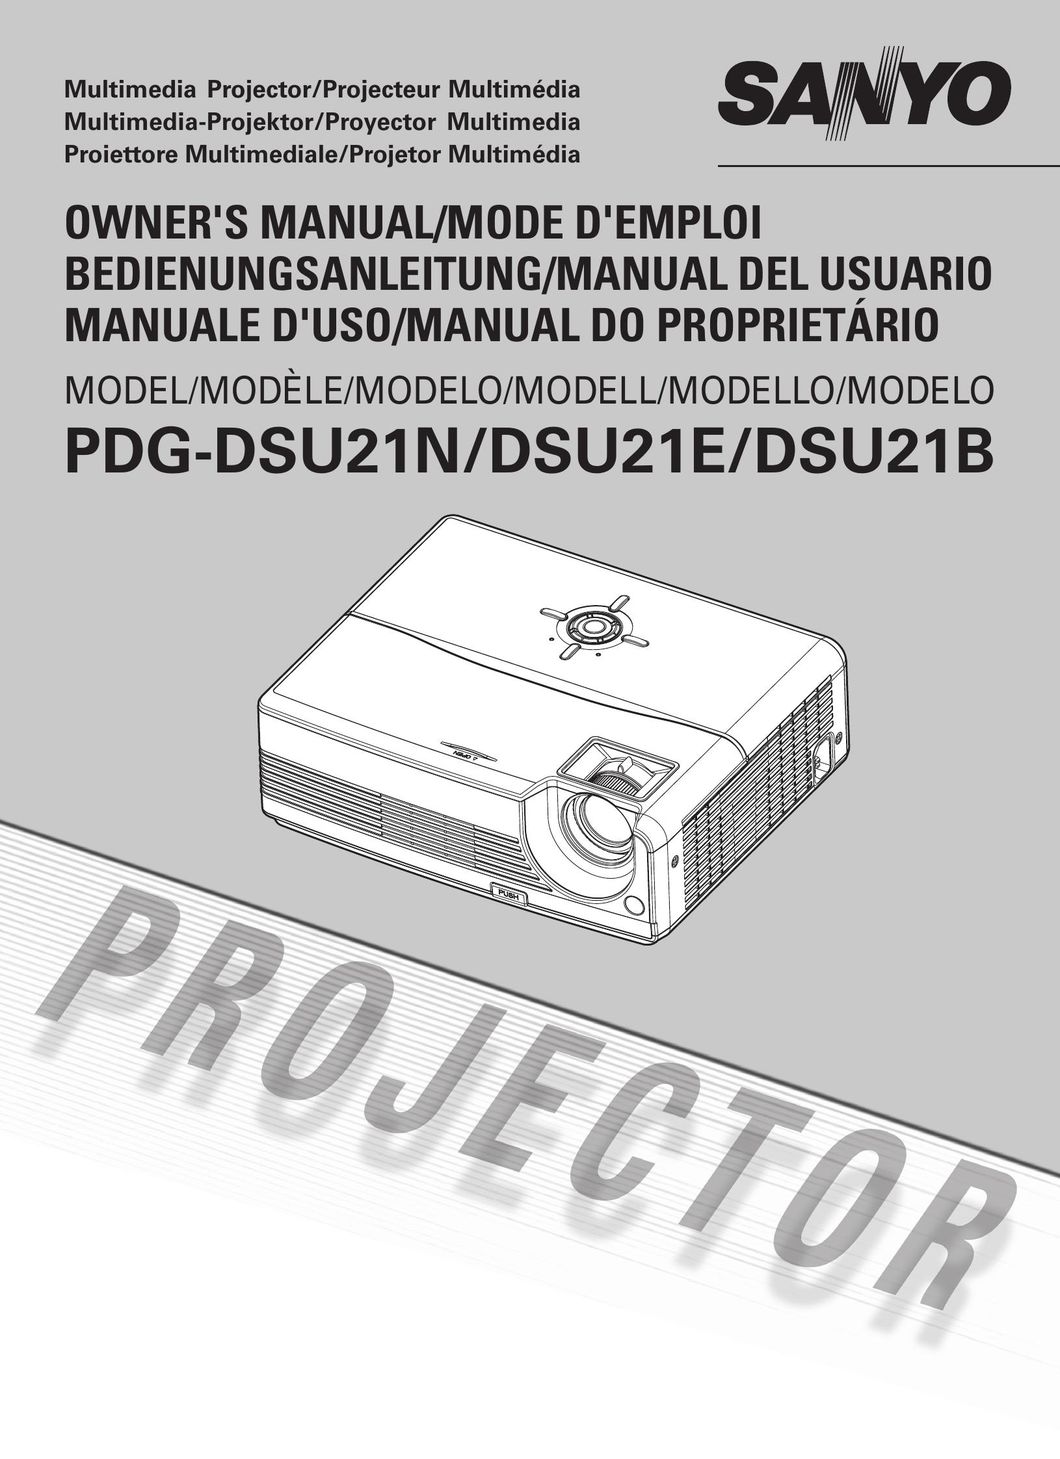 Sanyo DSU21E Projector User Manual